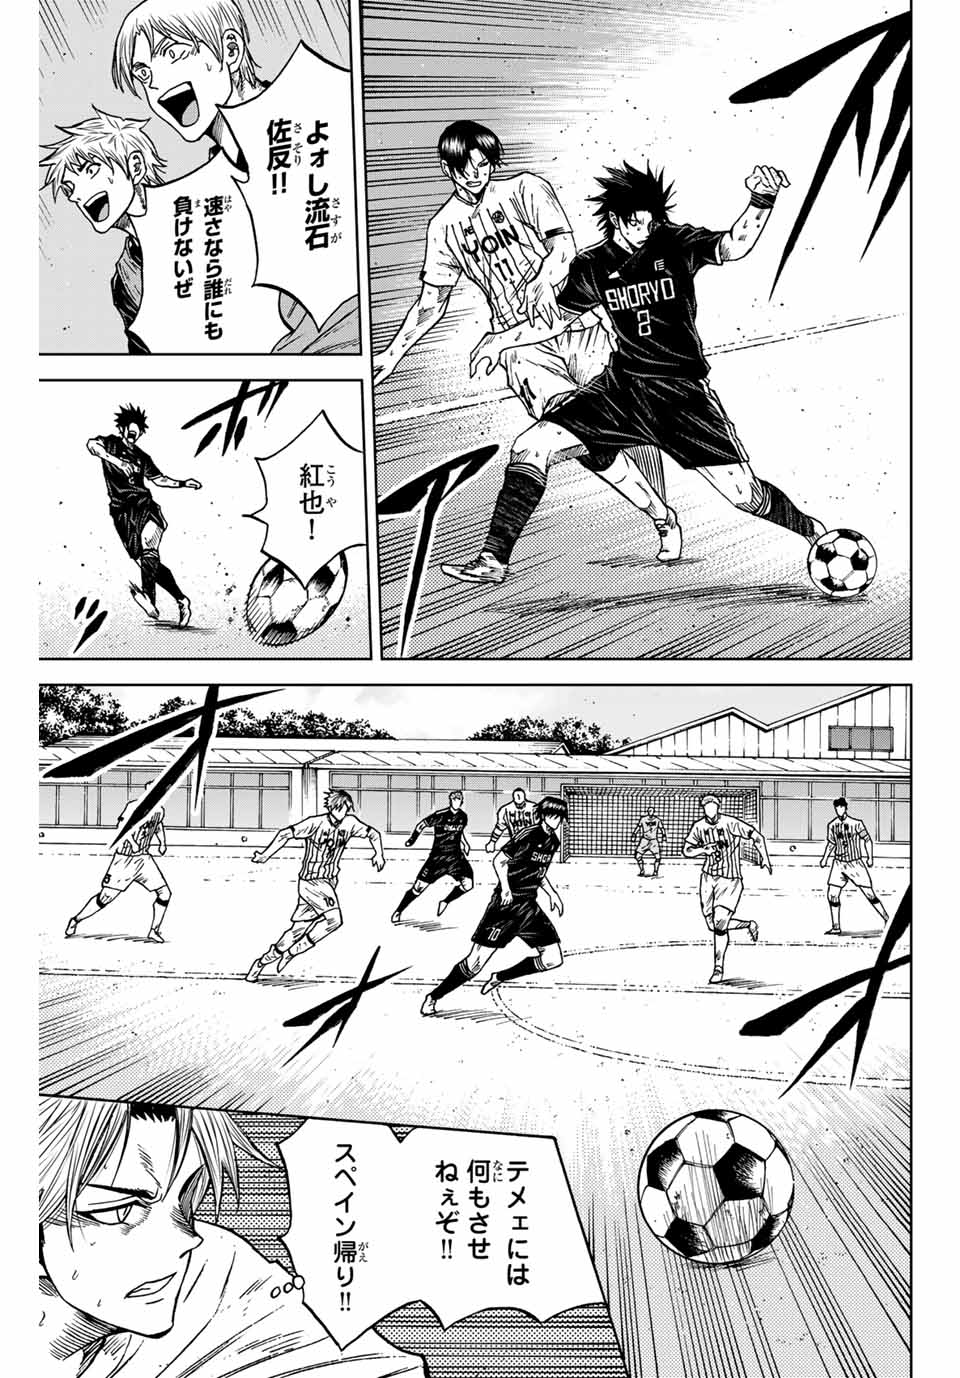 Aoku Somero - Chapter 95 - Page 5